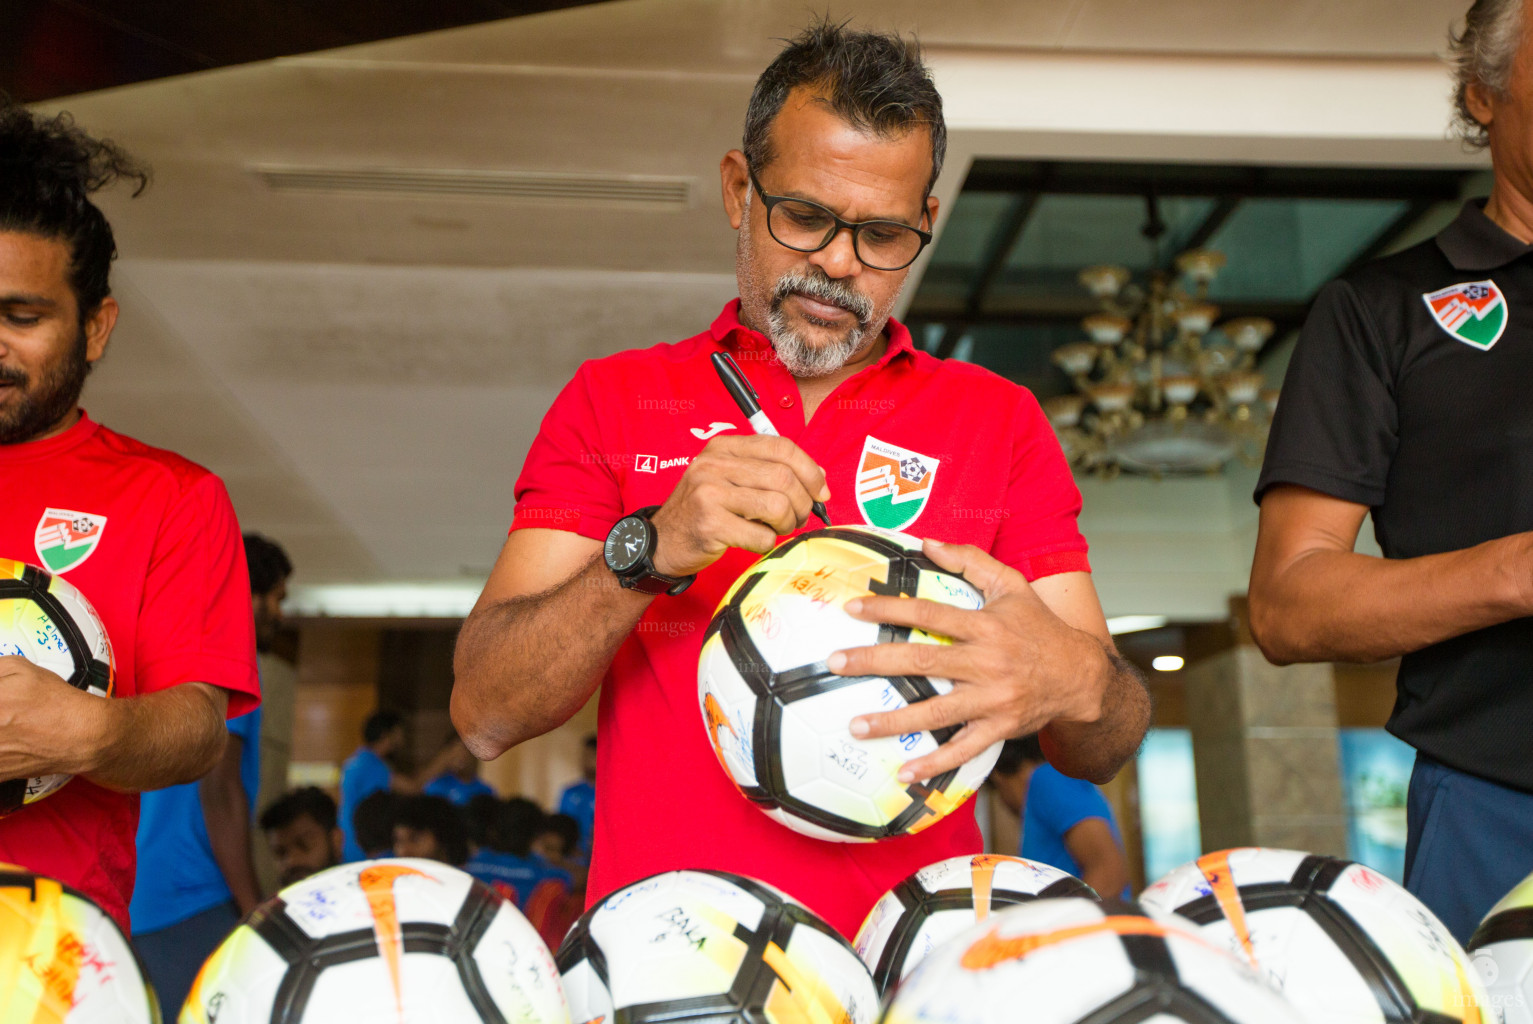 Jersey, balls signing and team photos SAFF Suzuki Cup 2018 in Dhaka, Bangladesh, Thursday, September 06, 2018. (Images.mv Photo/ Hussain Sinan)